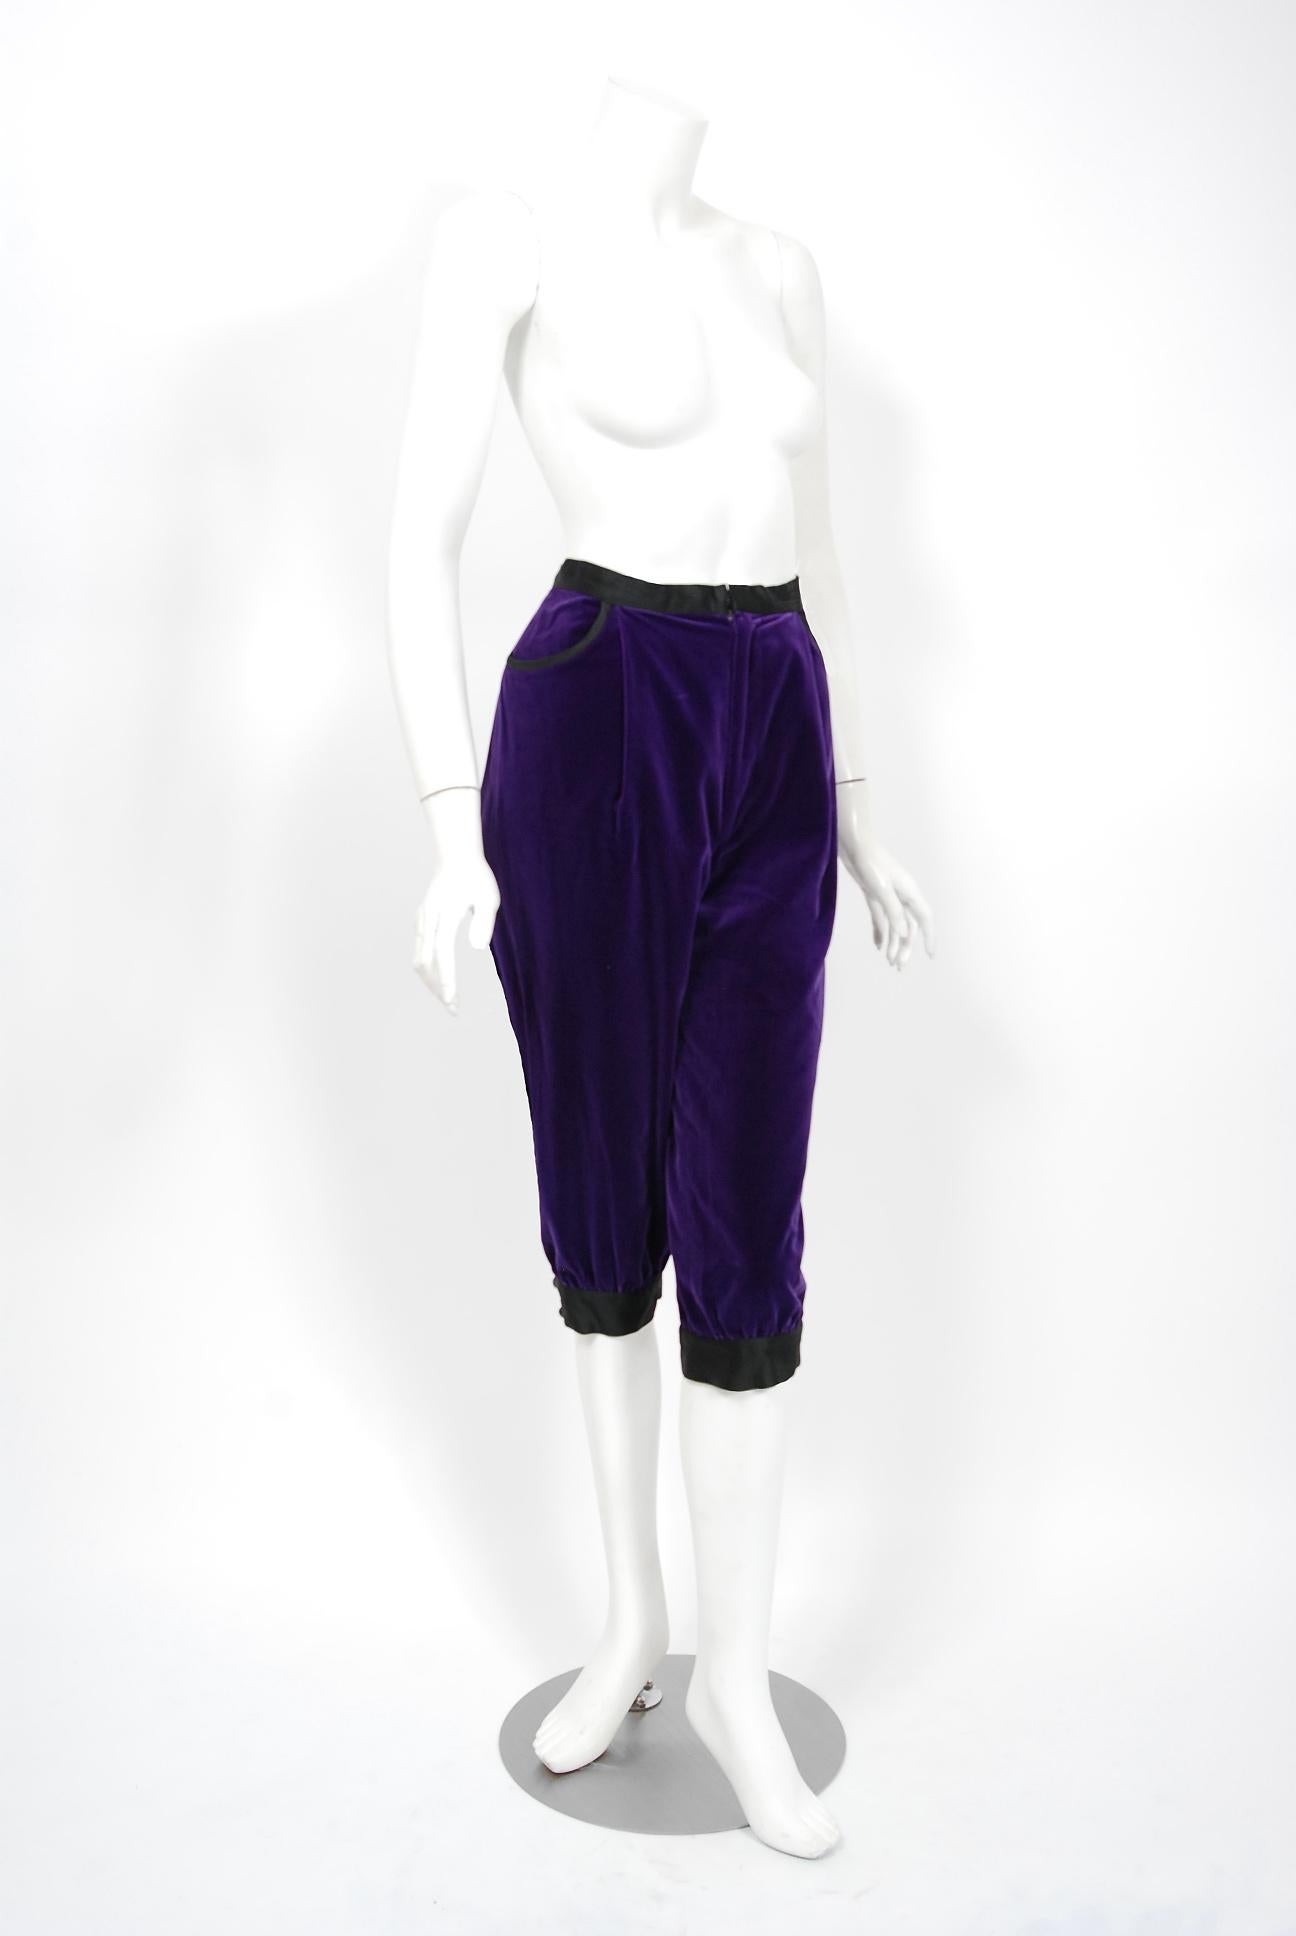 Women's Vintage 1979 Yves Saint Laurent Documented Purple Velvet Jacket Knicker Pantsuit For Sale